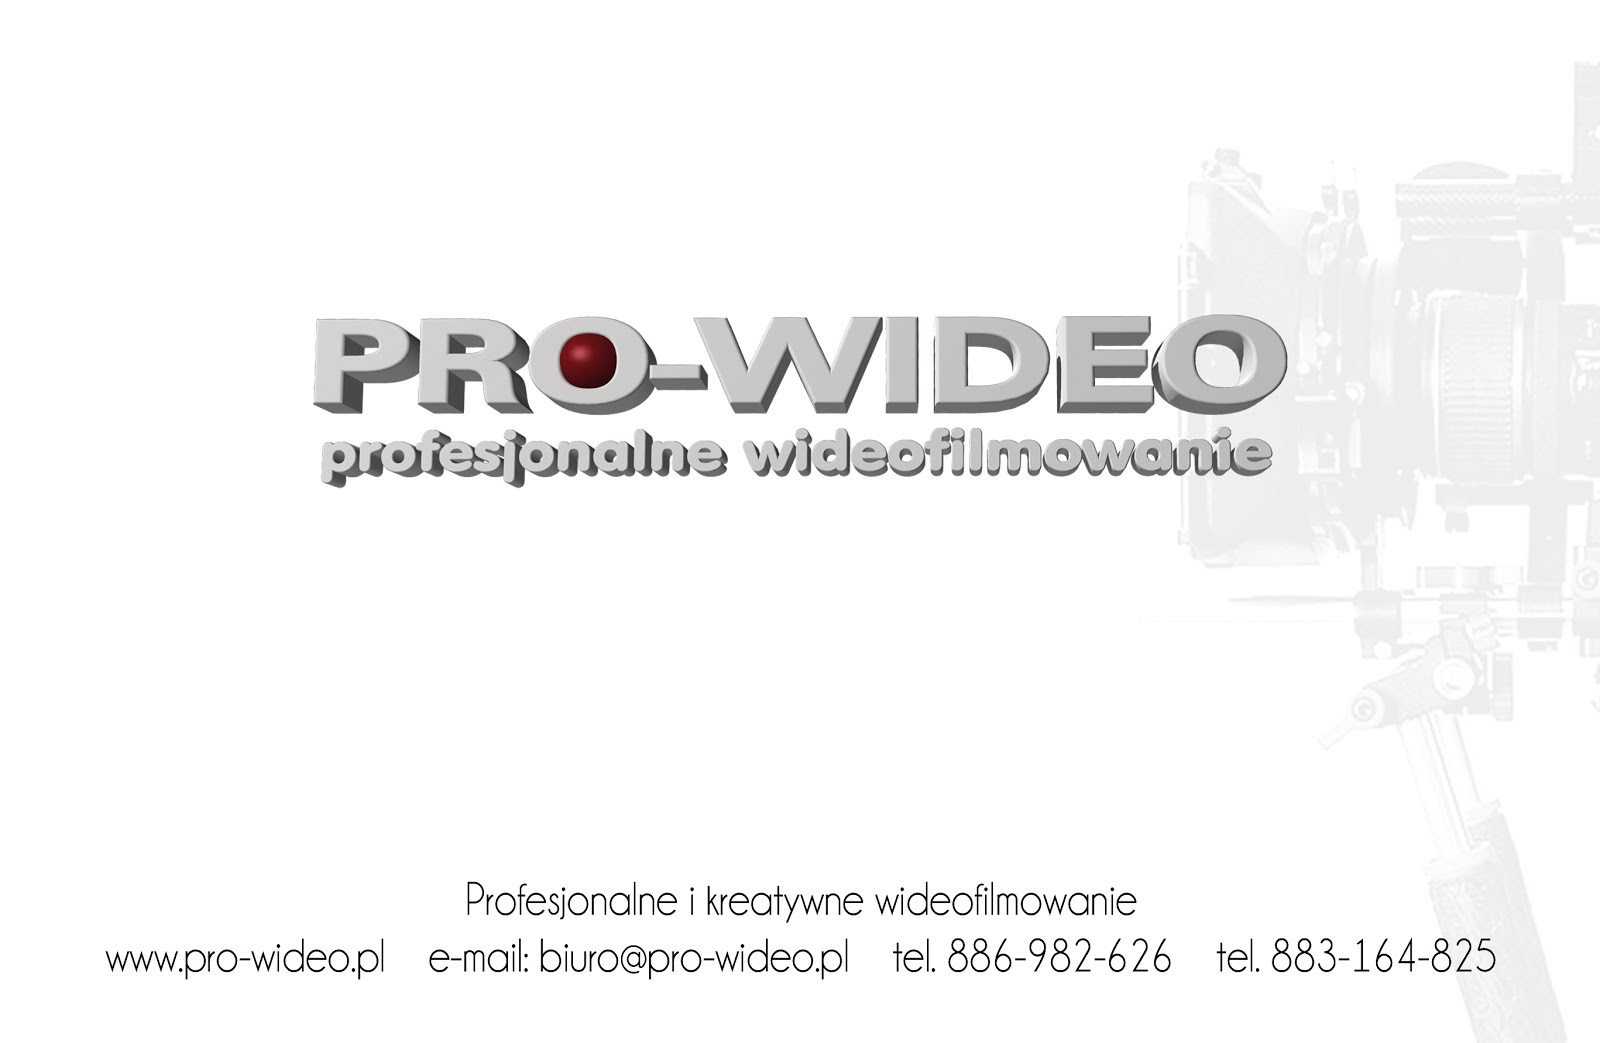 Pro-Wideo